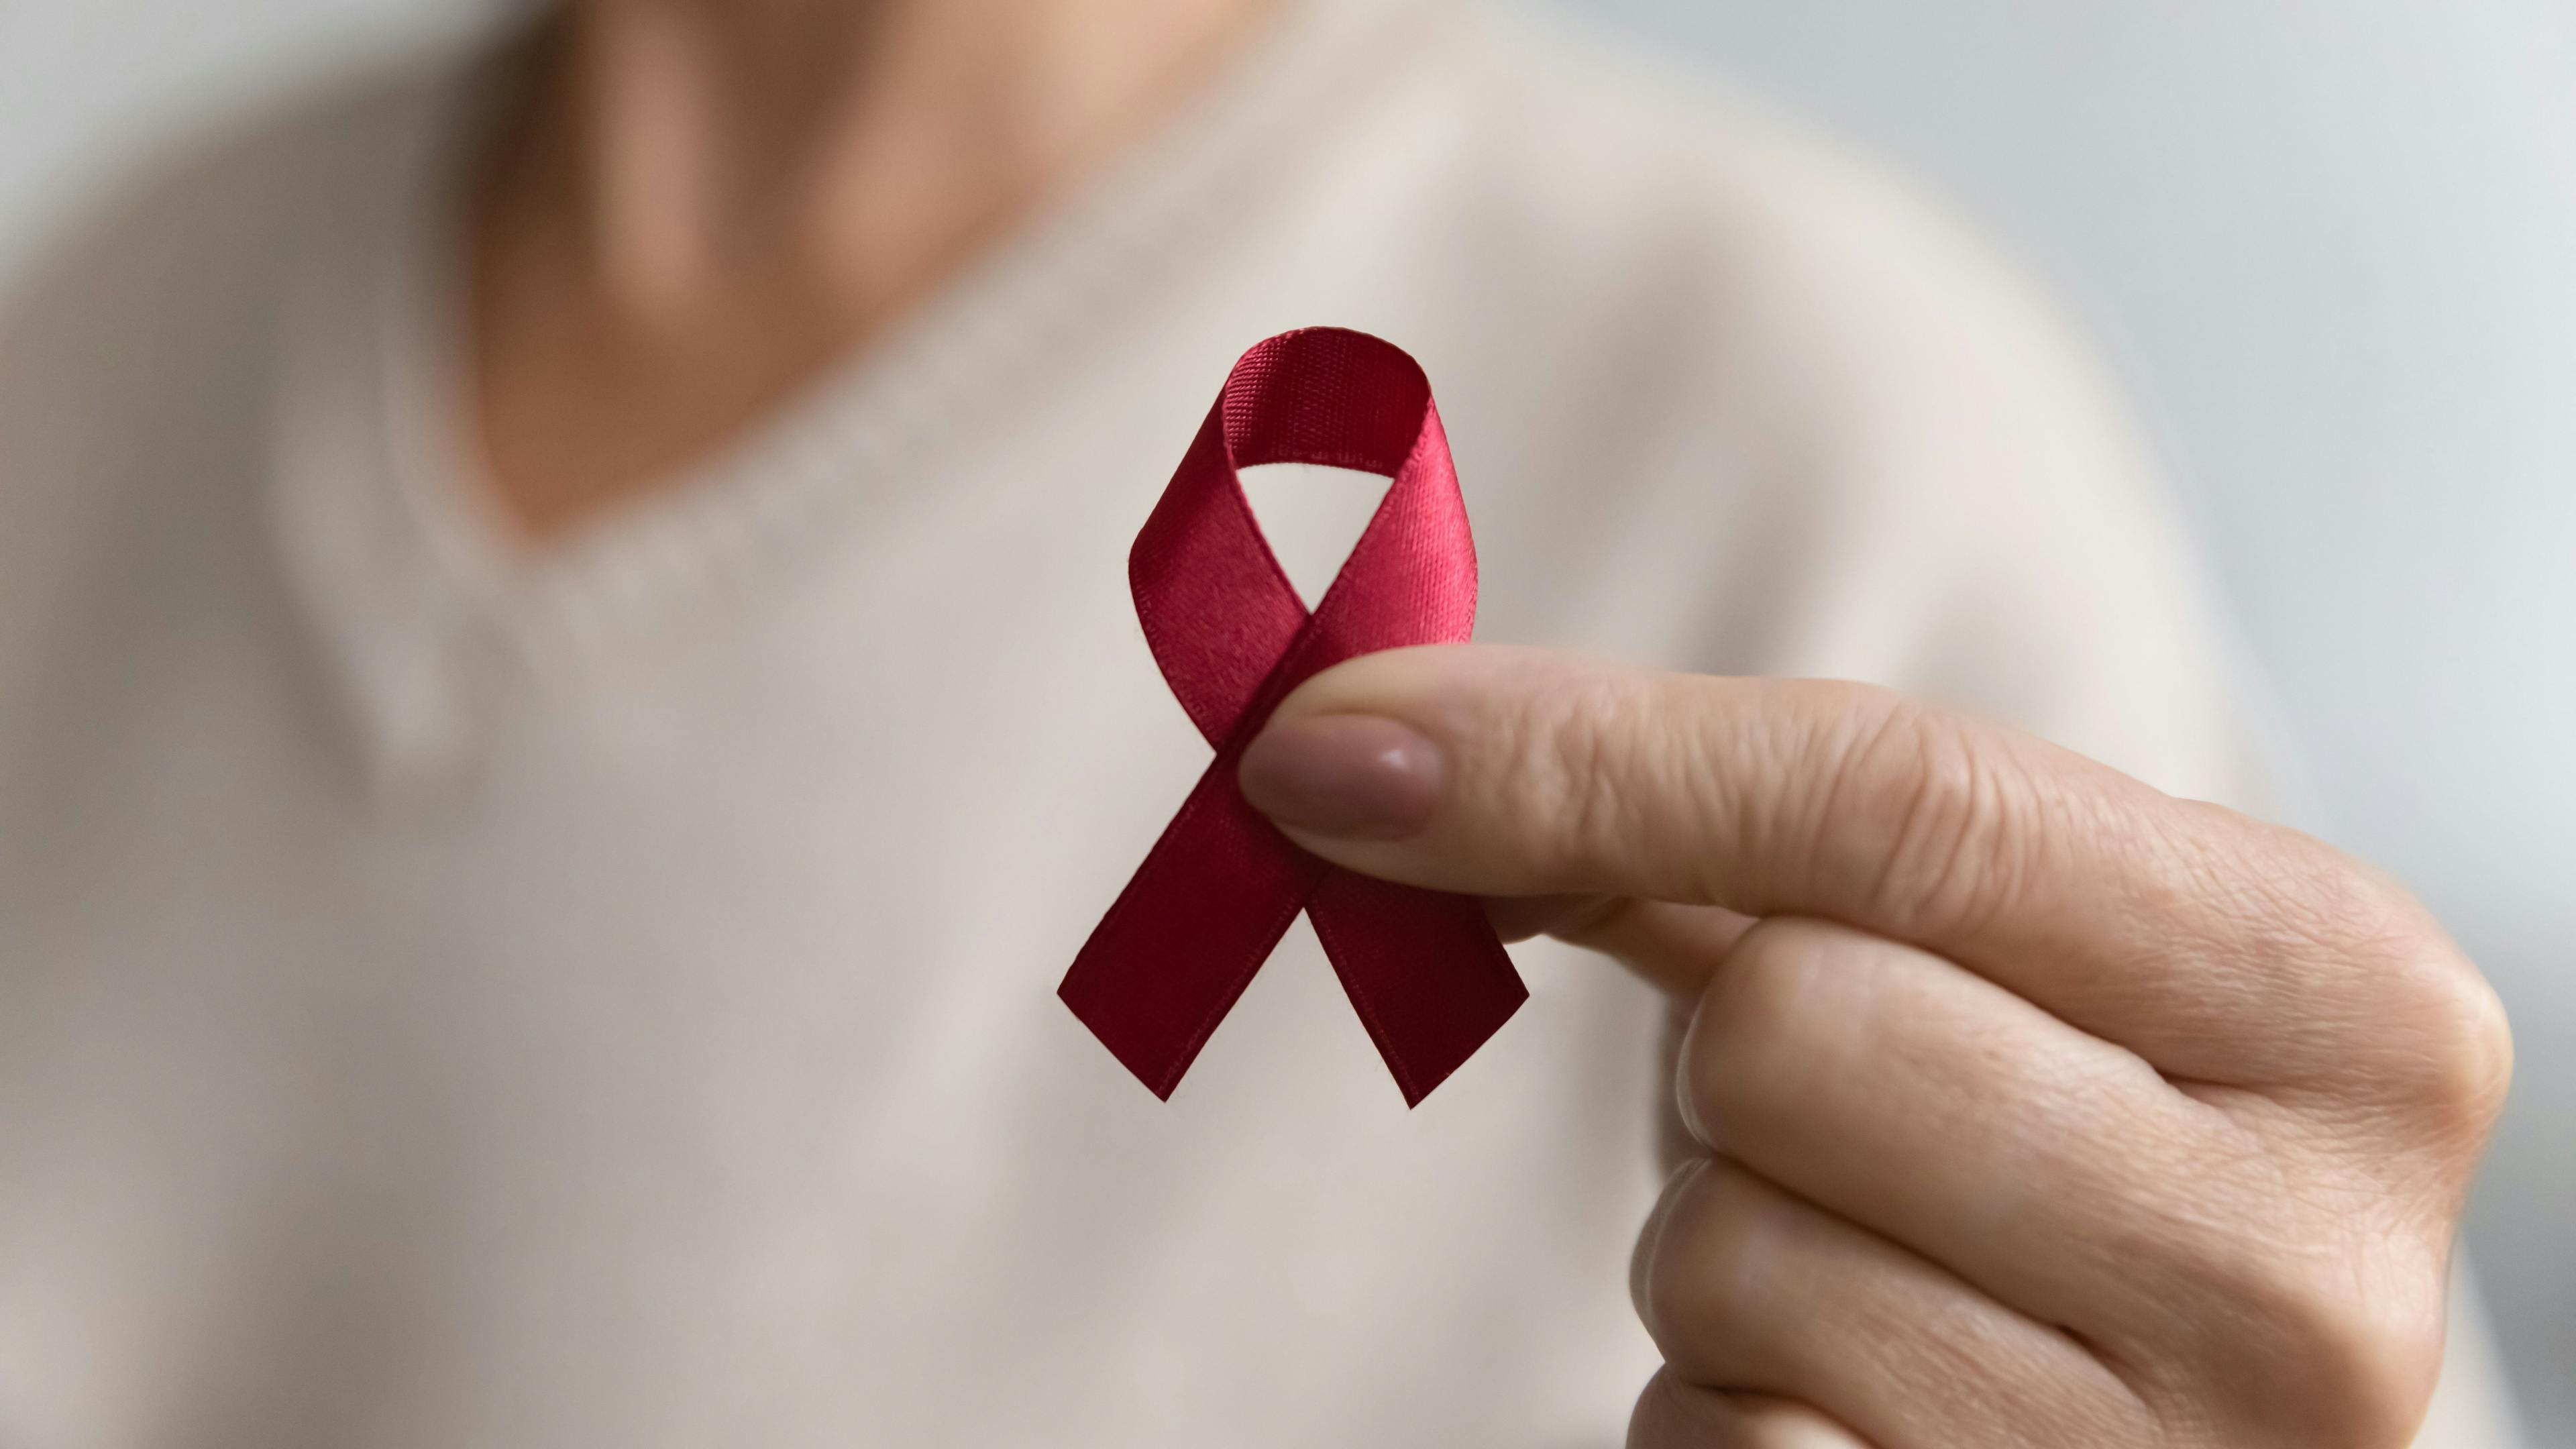 HIV Awareness | Image credit: fizkes - stock.adobe.com